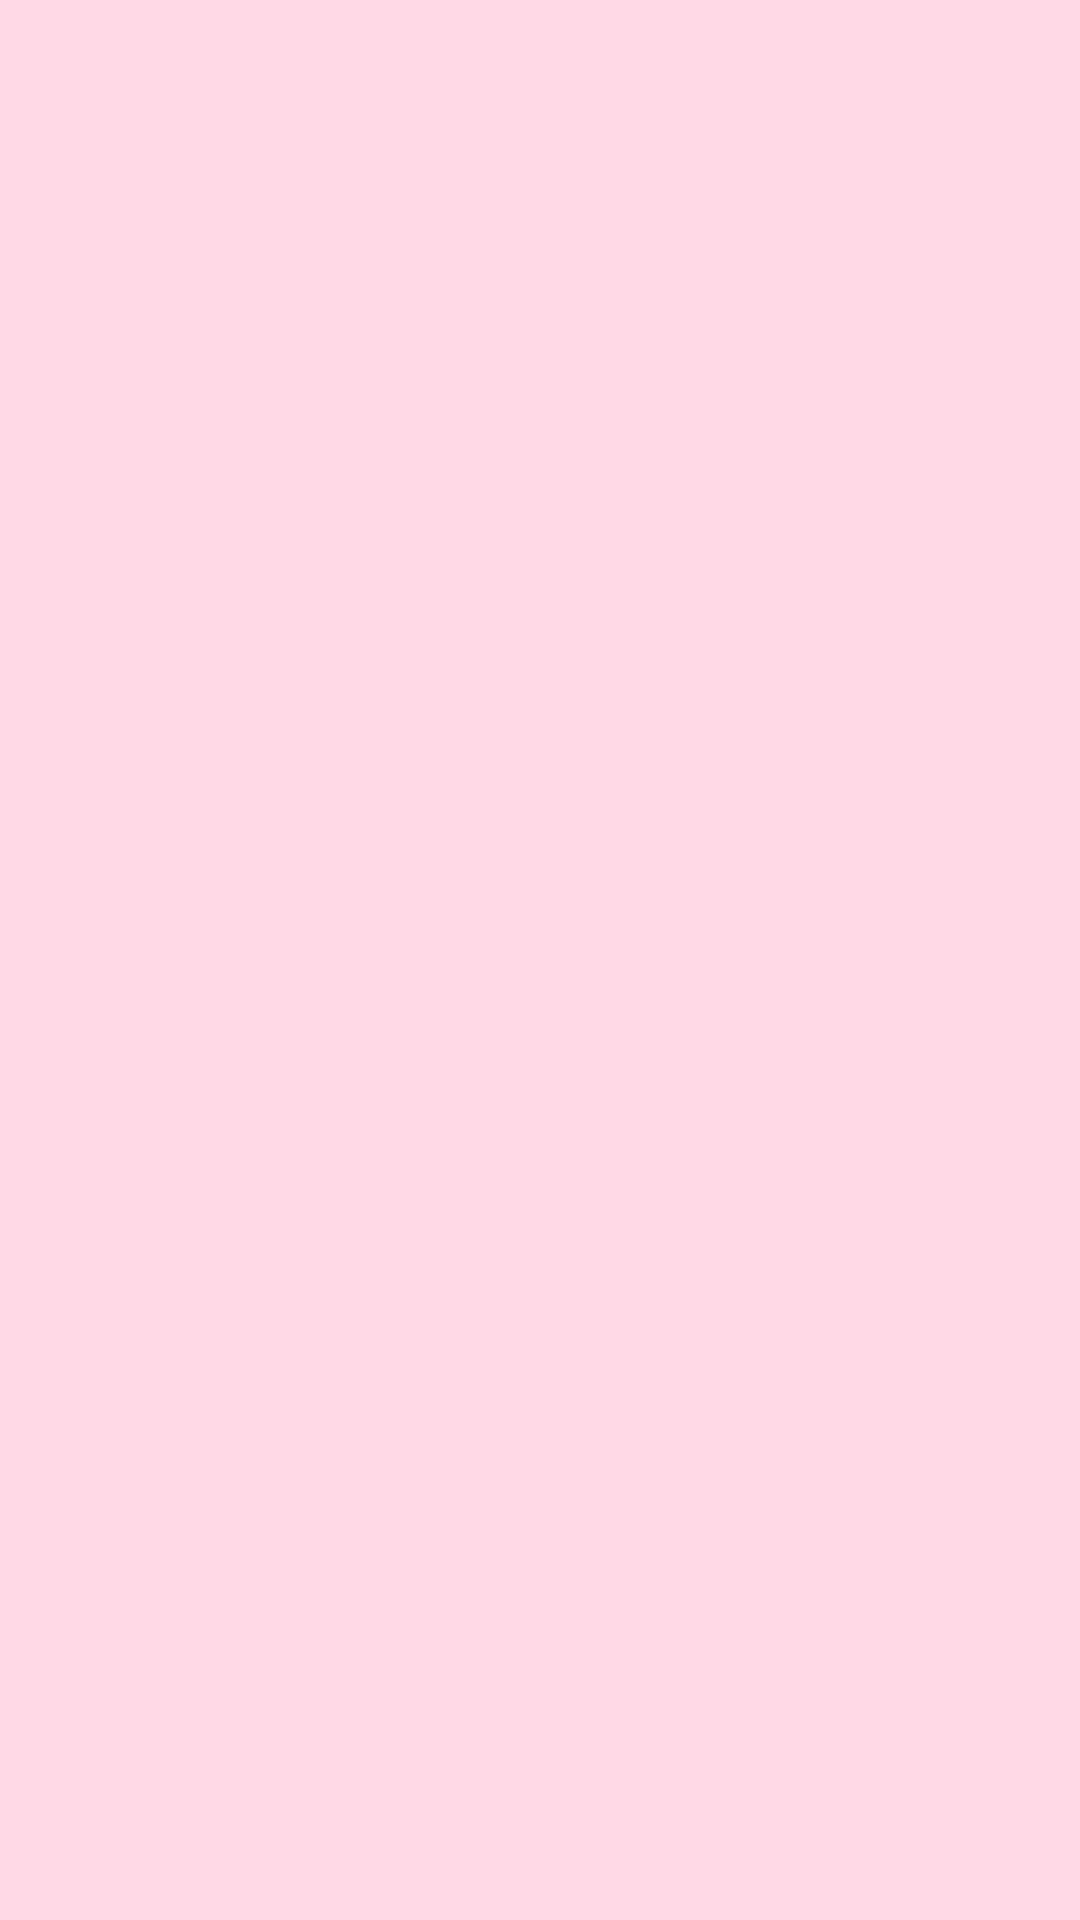 1080x1920 Plain baby pink wallpaper